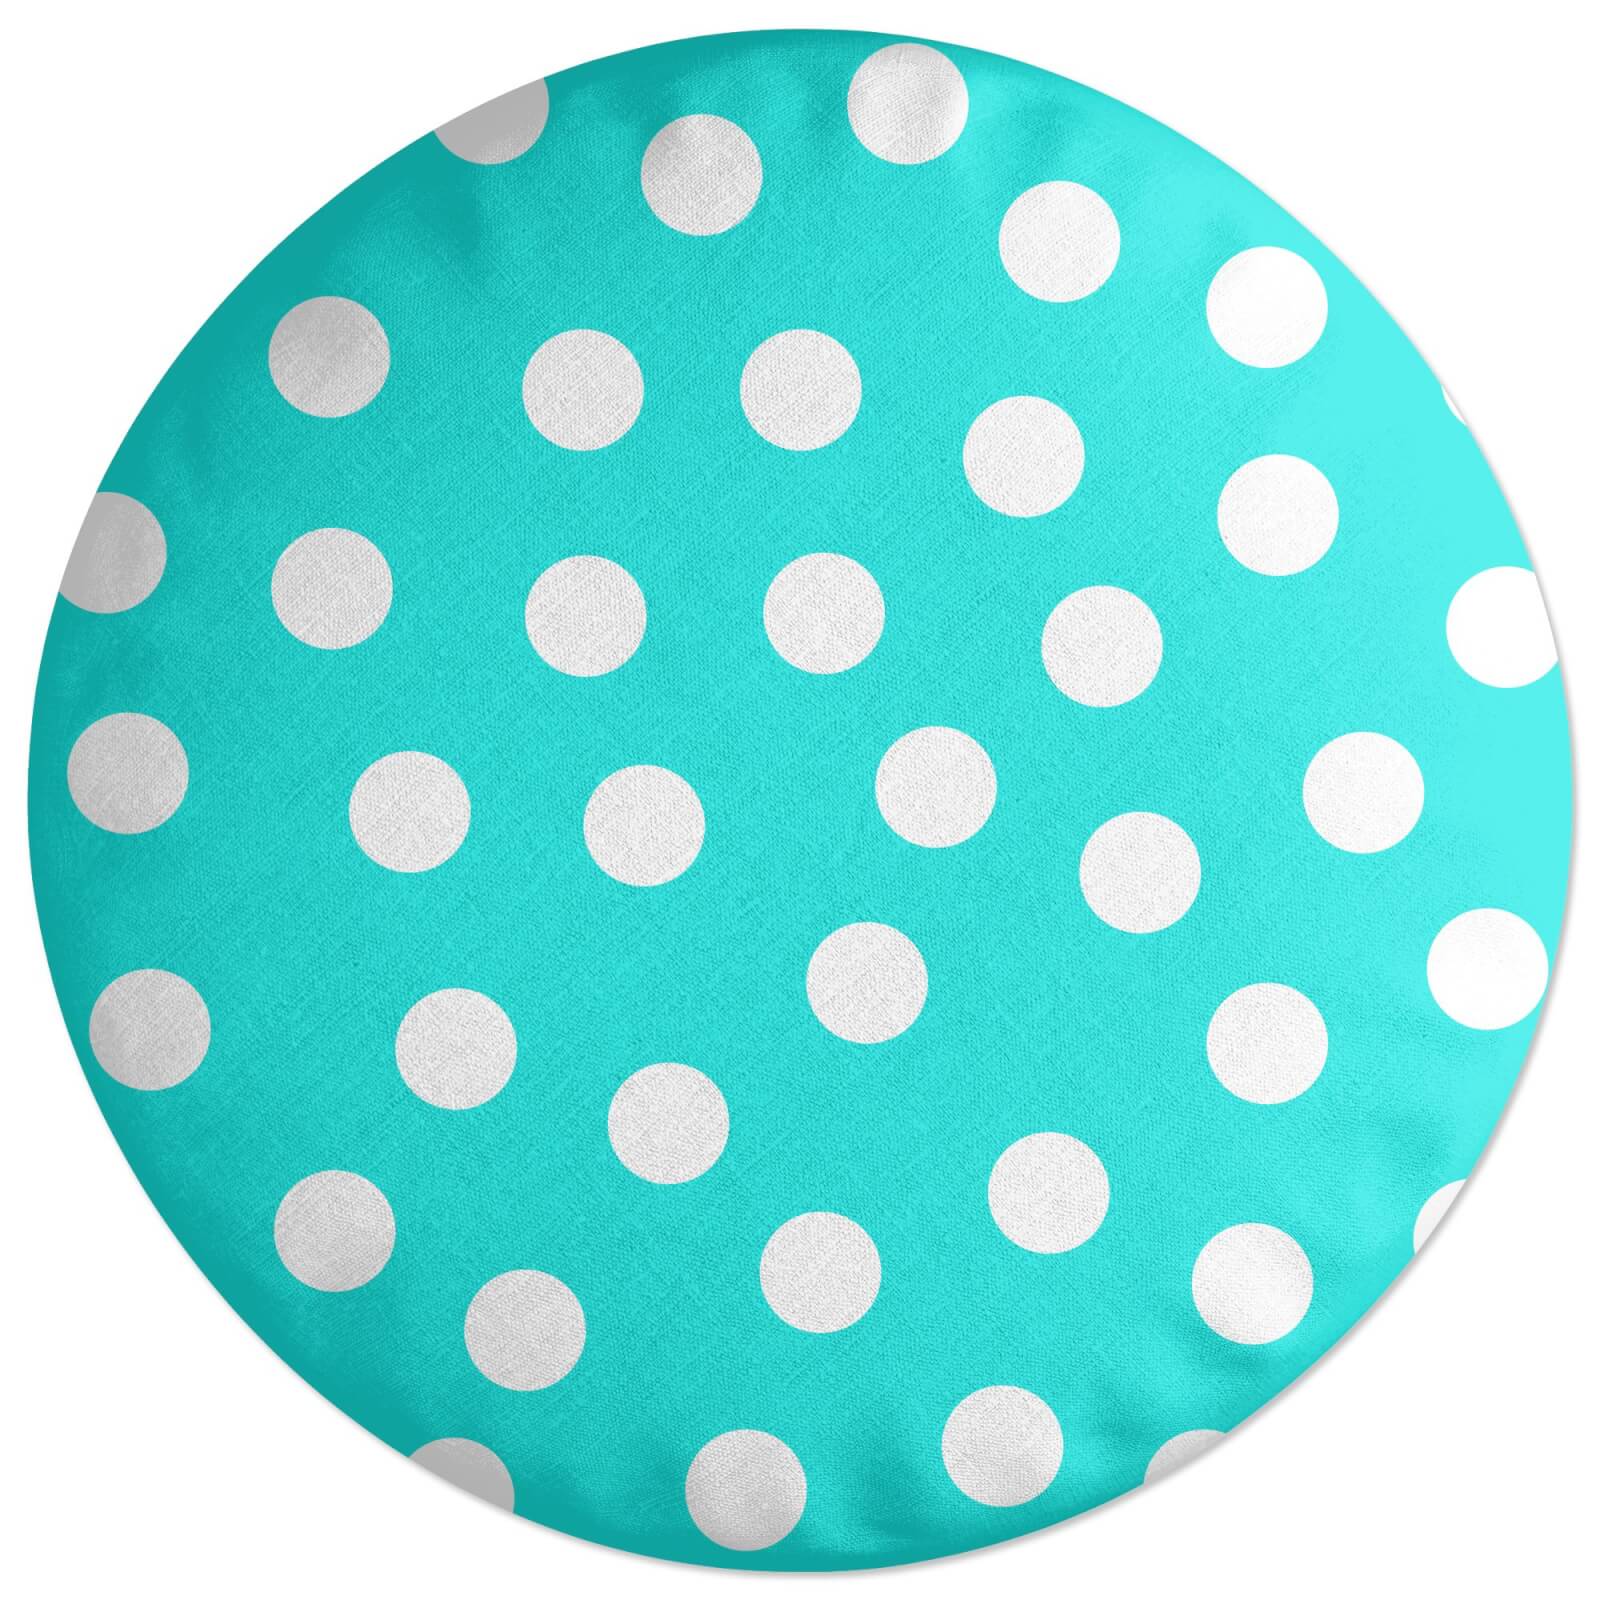 Turquoise Polka Dots Round Cushion